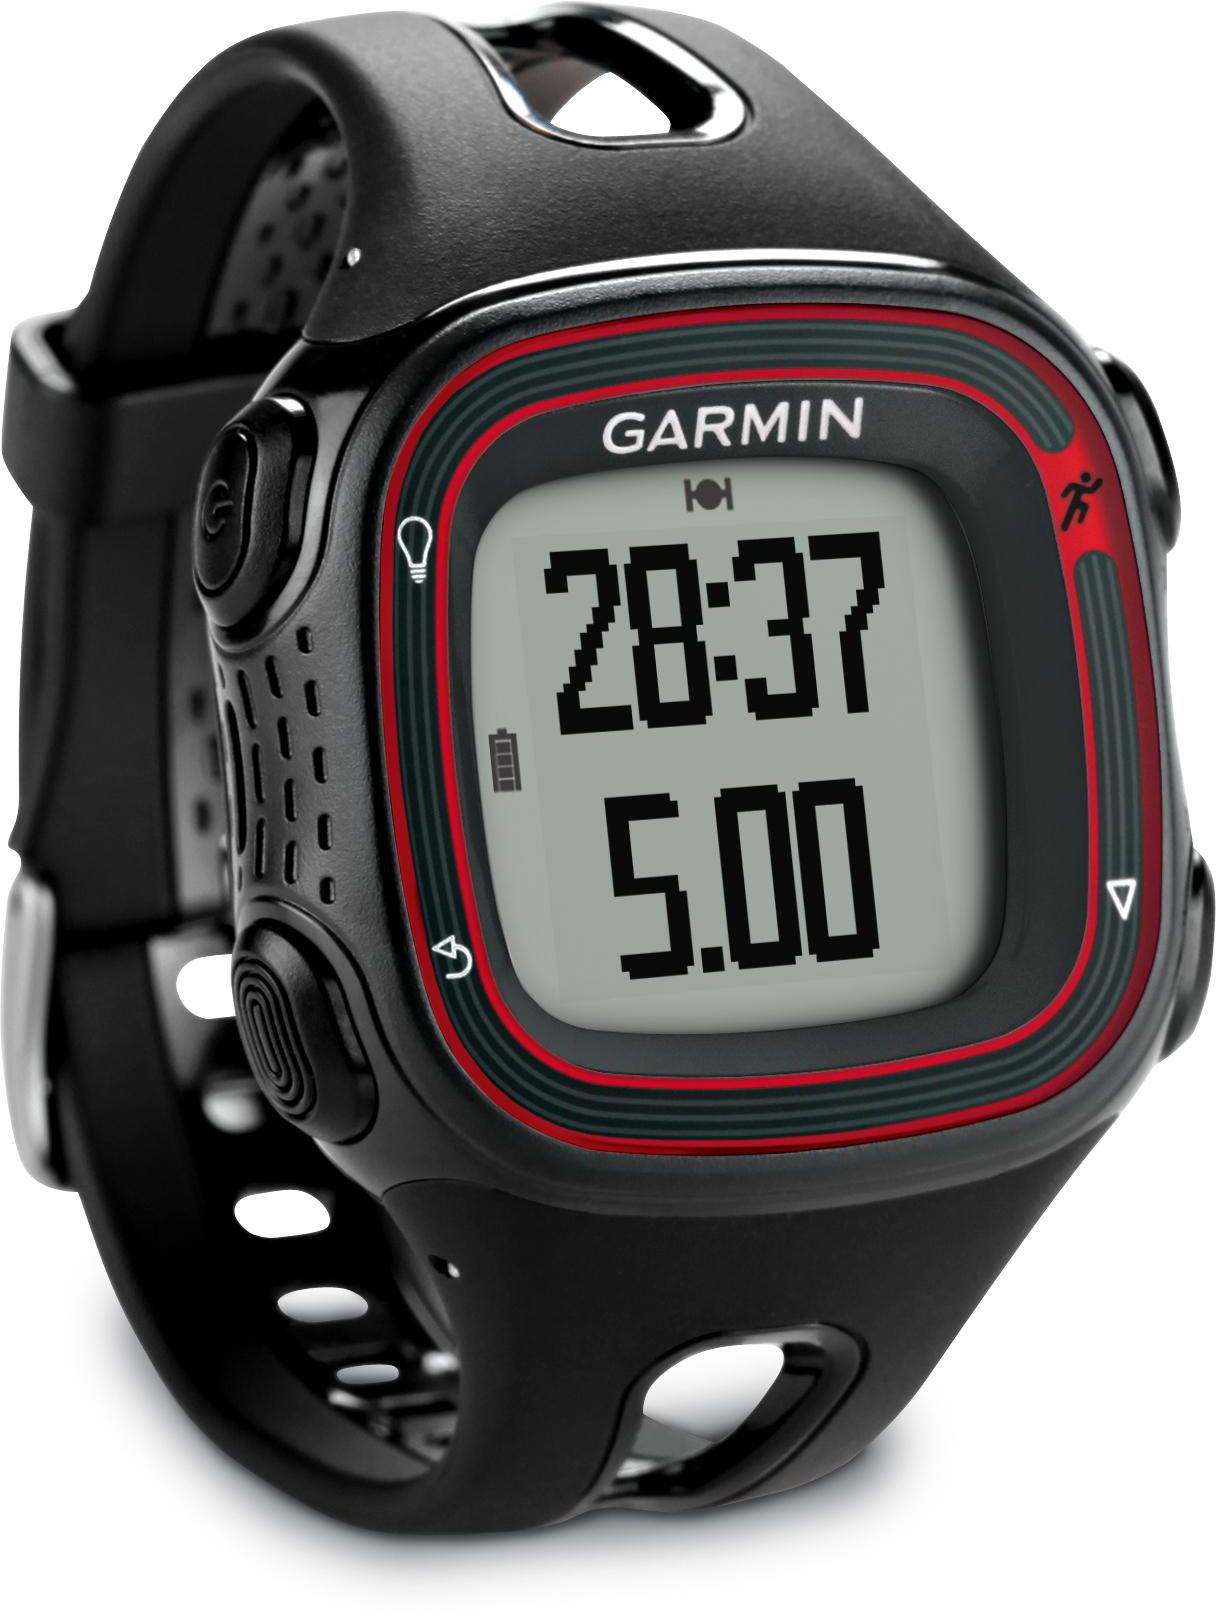 Garmin Forerunner 10 Distance Pace Calories Tracking Sports GPS Watch Black